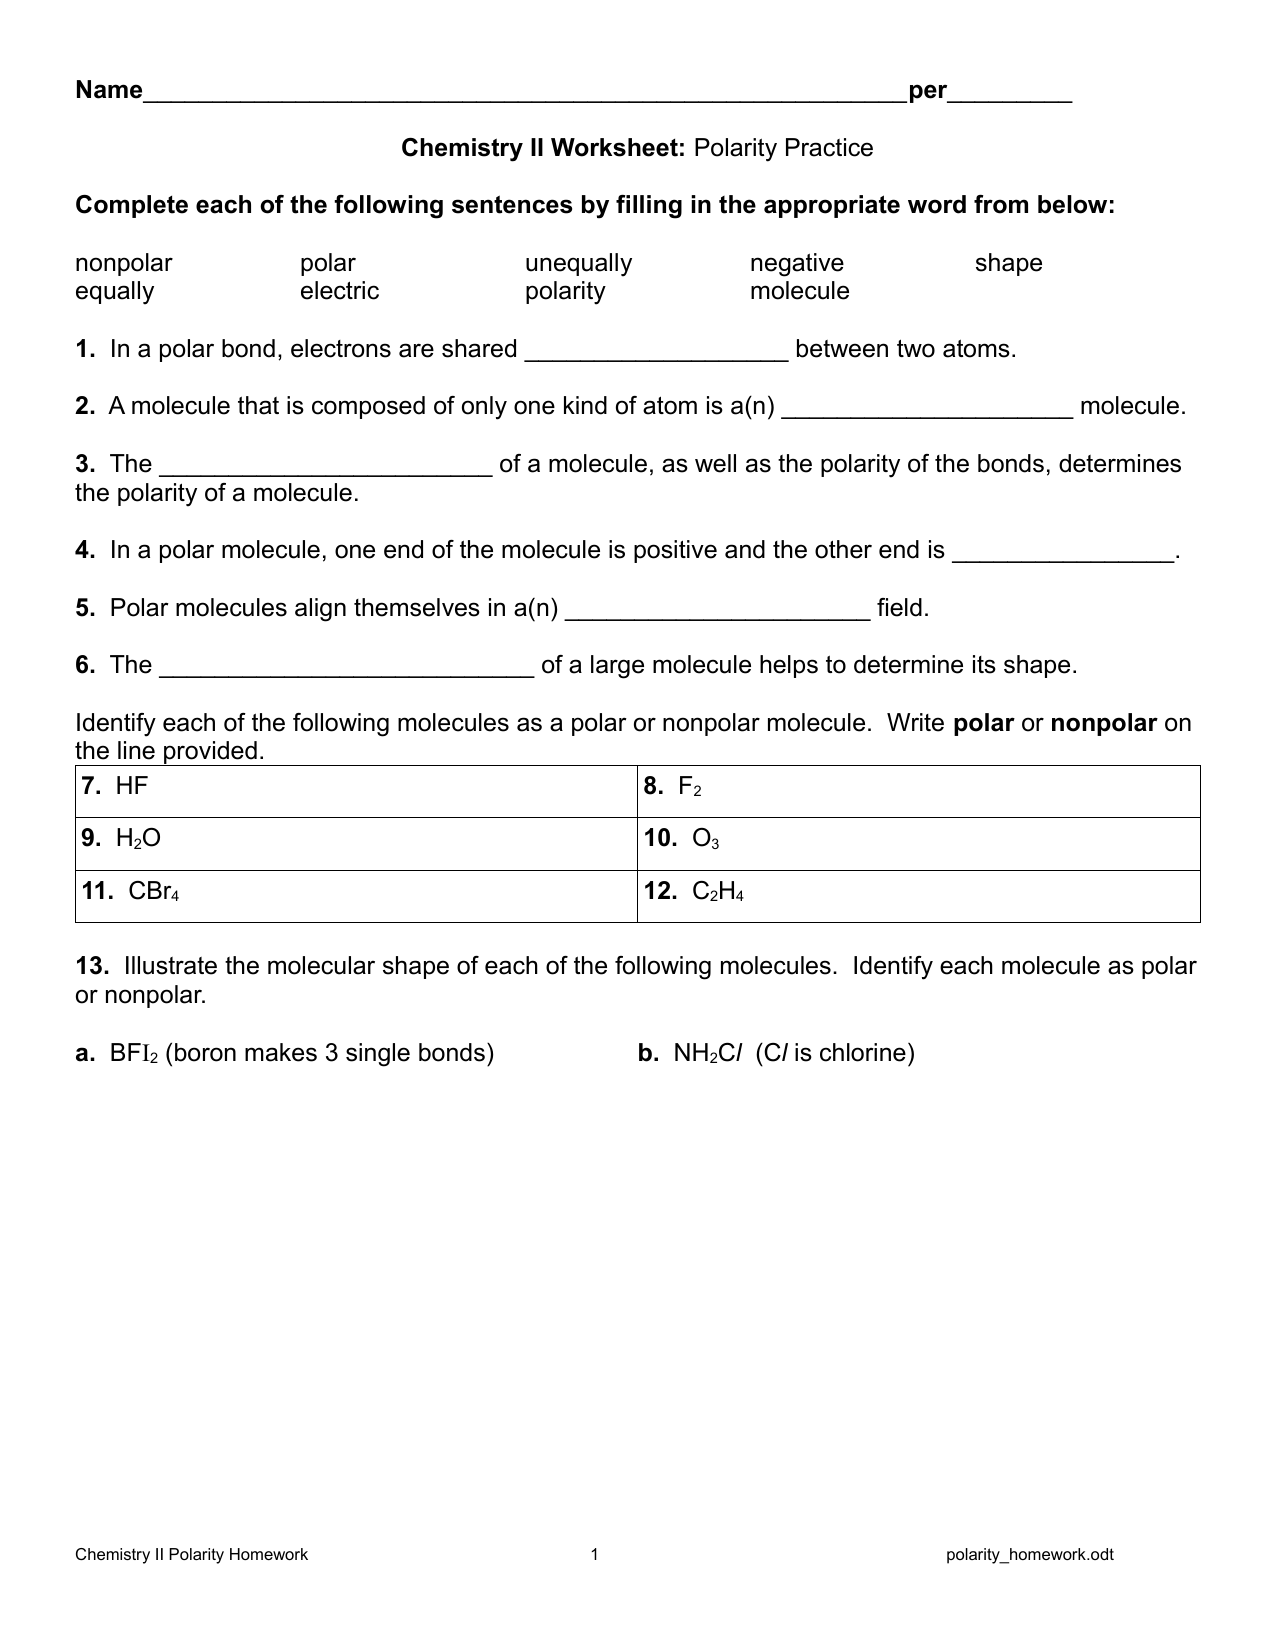 Chemistry II Polarity Homework With Worksheet Polarity Of Bonds Answers